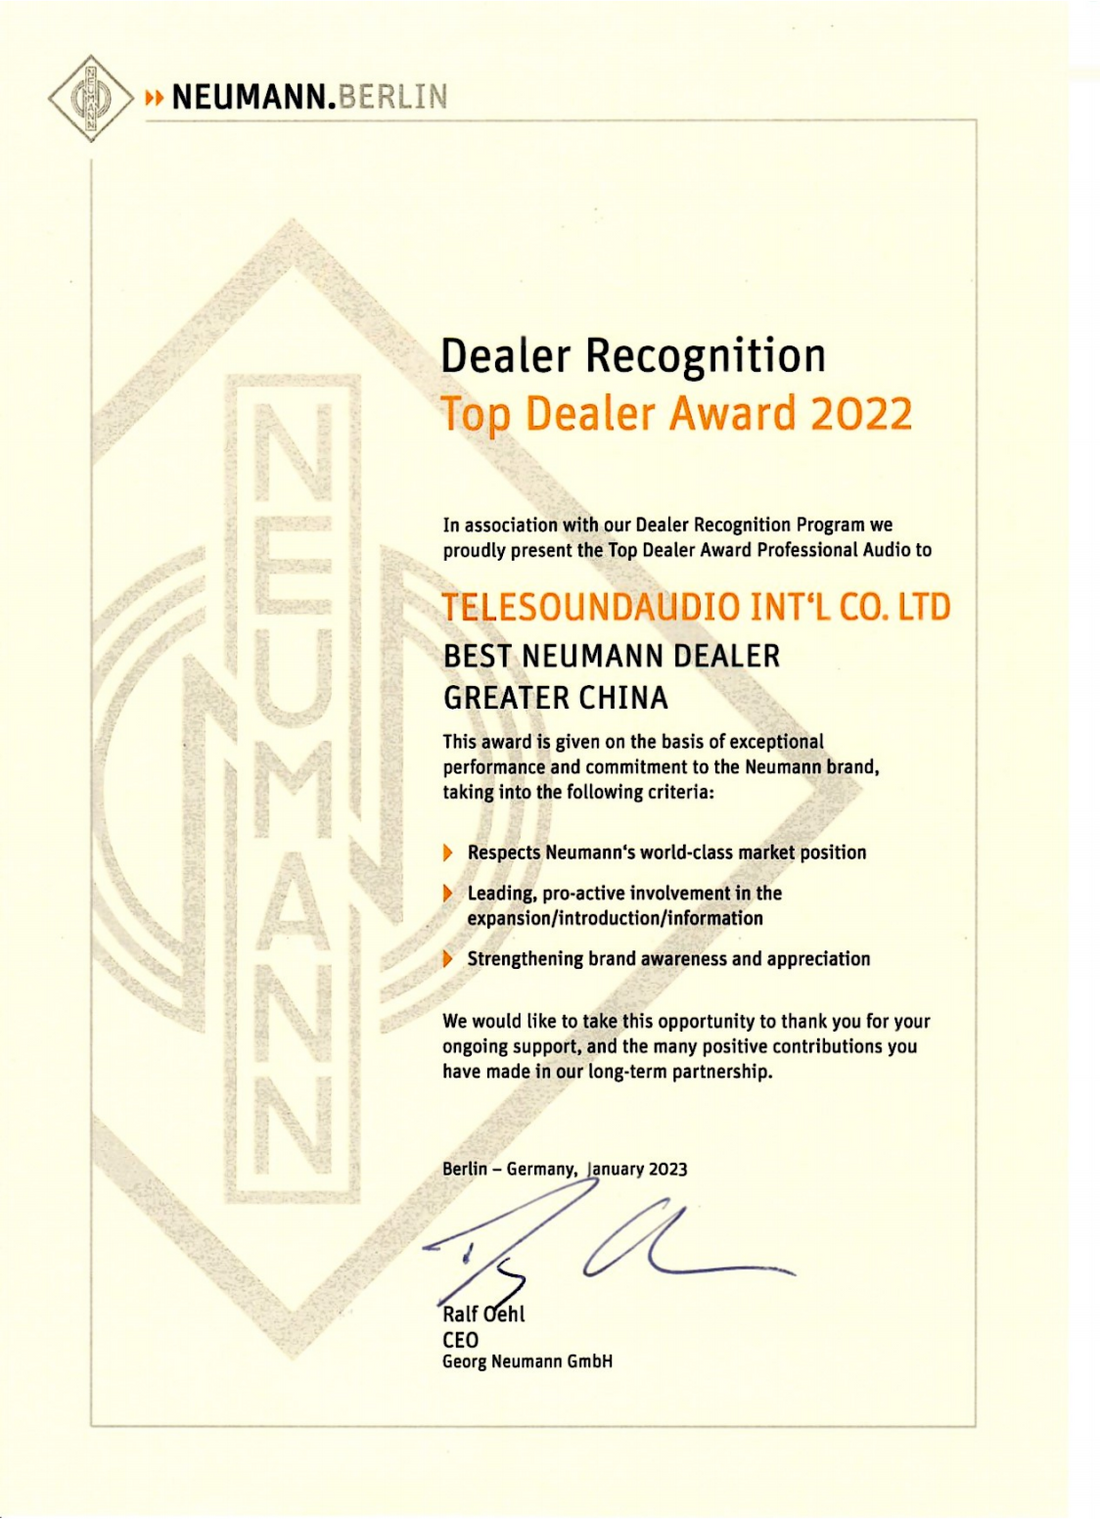 Top Dealer Award 2022